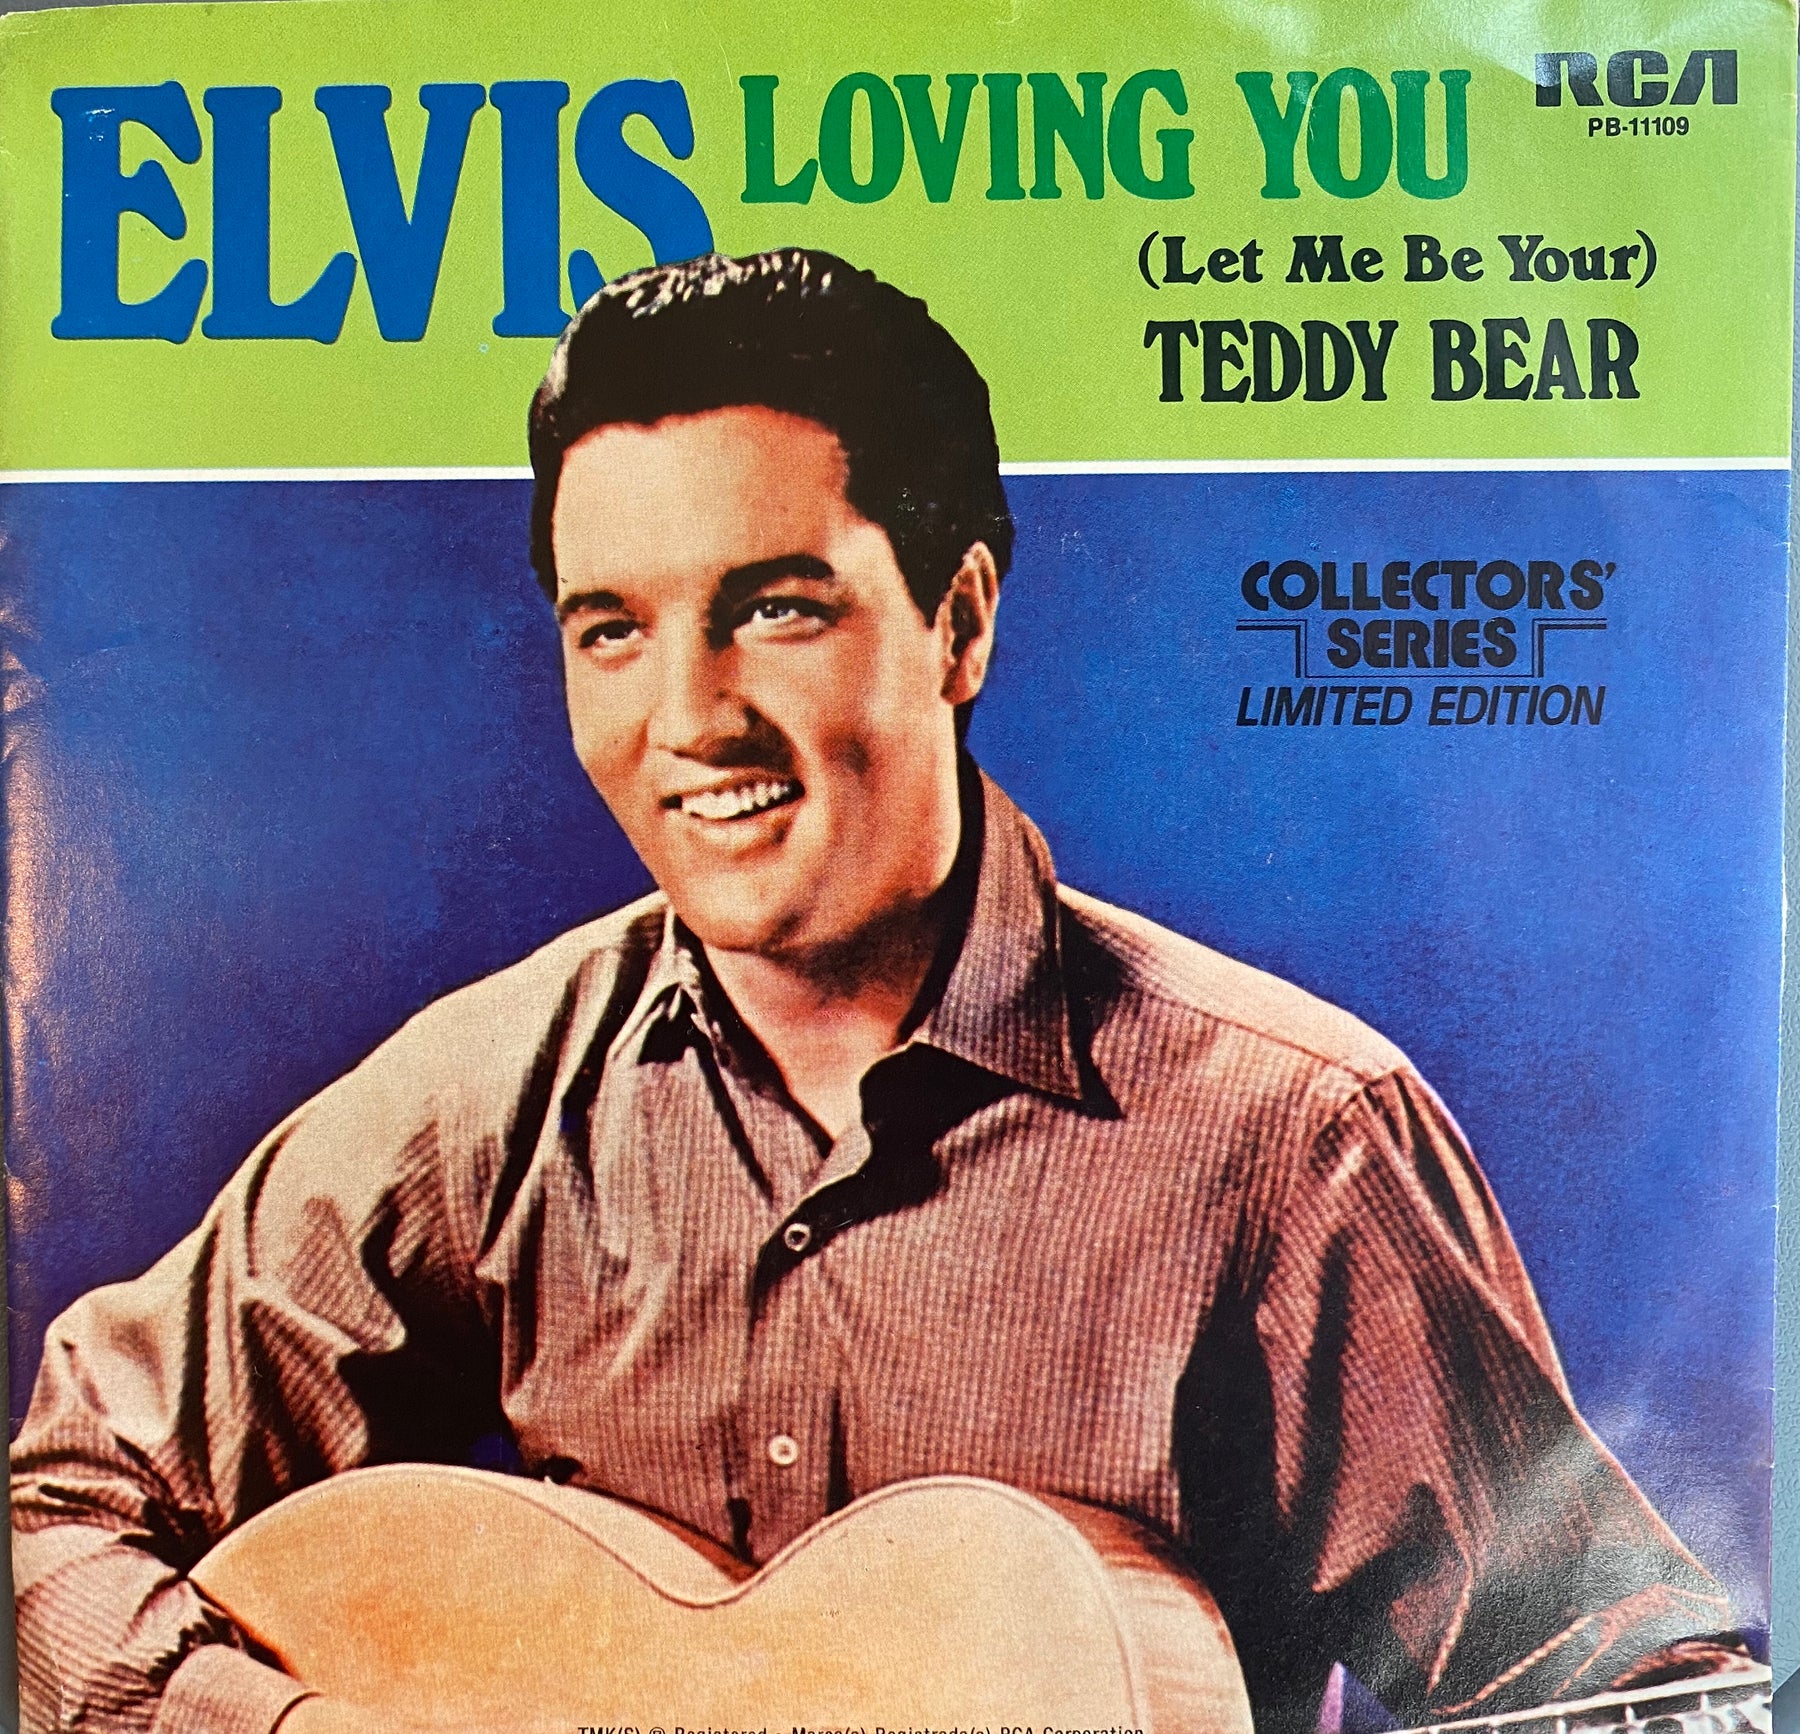 Teddy Bear (Let Me Be Your) - Elvis Presley